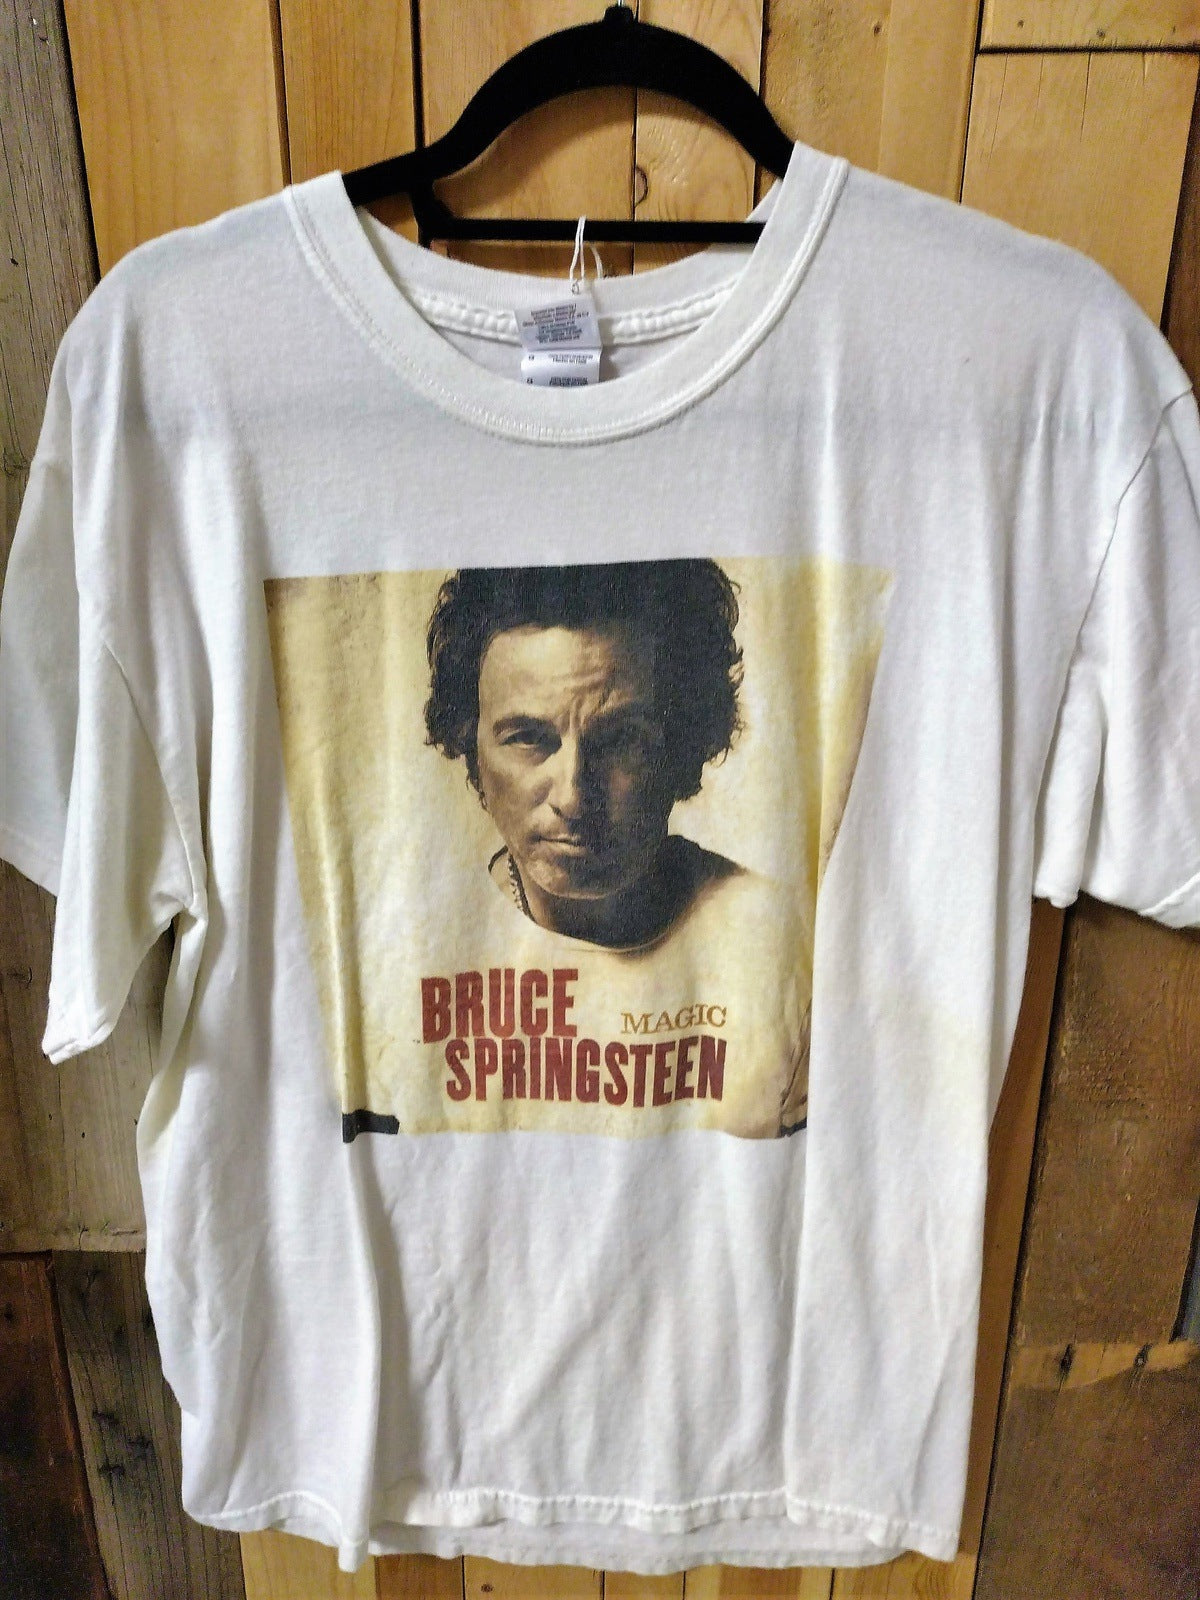 Bruce Springsteen "Magic" Tour Shirt Size Large